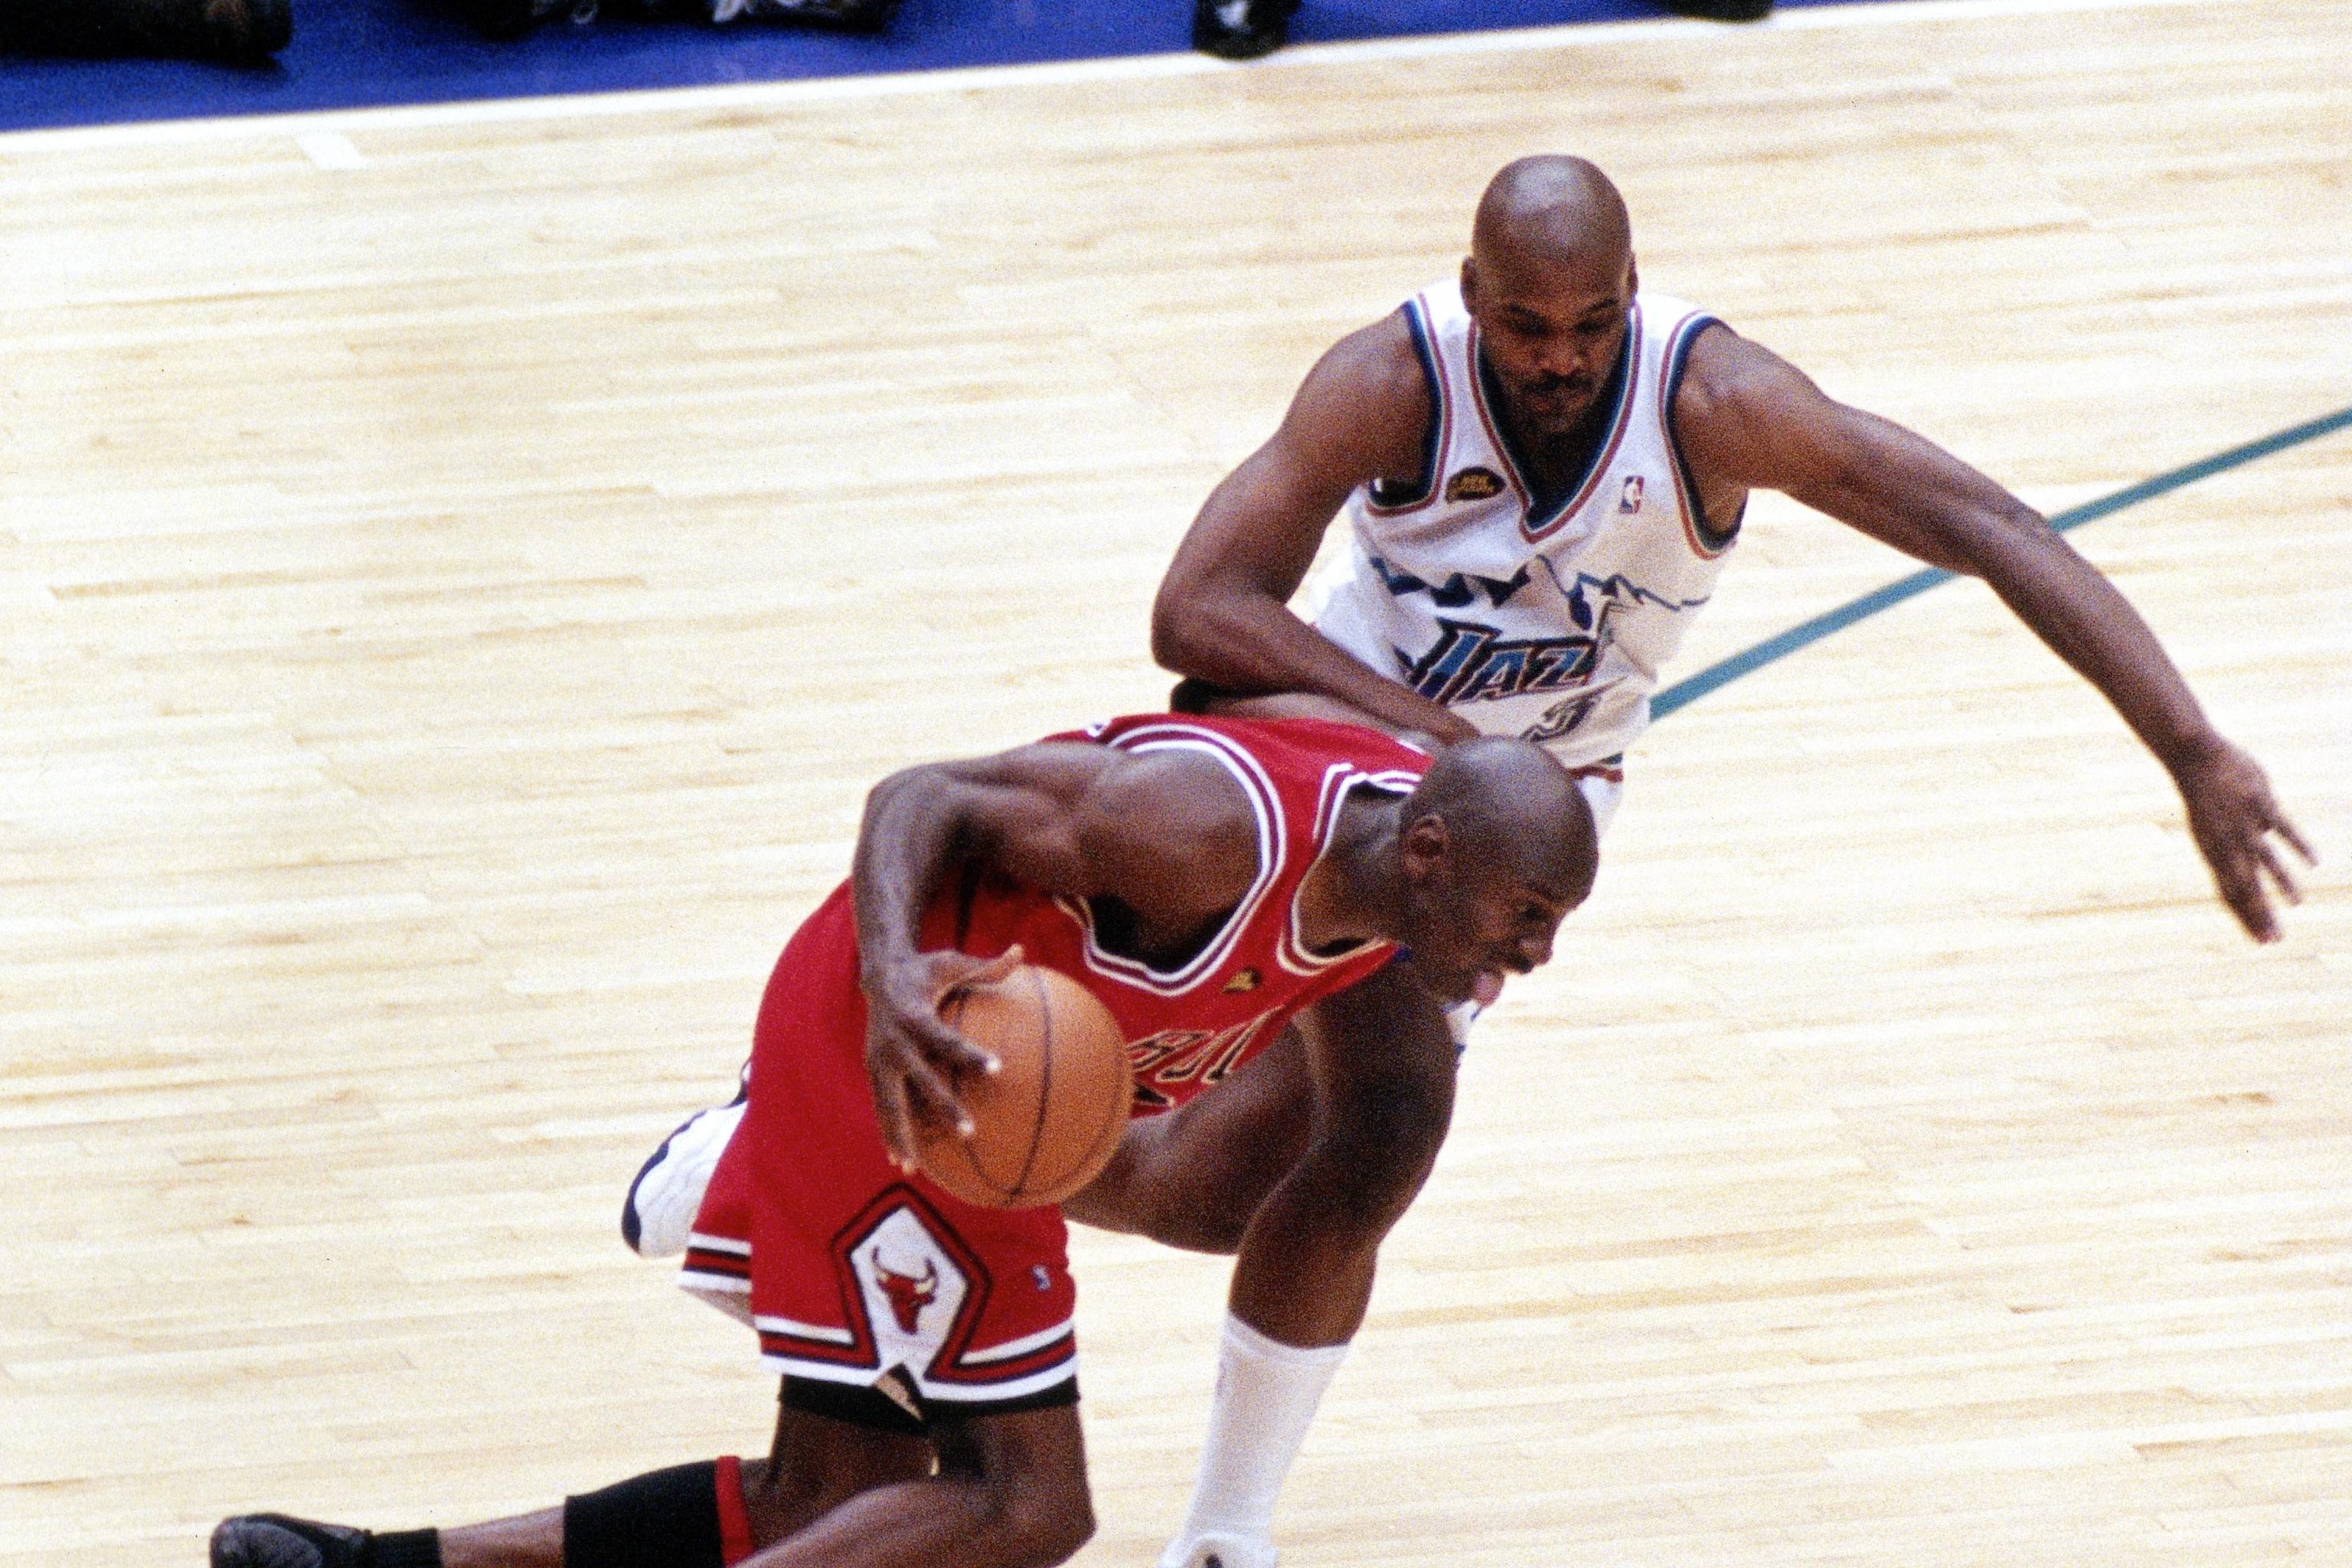 The Last Dance: Michael Jordan insists no push off of Bryon Russell